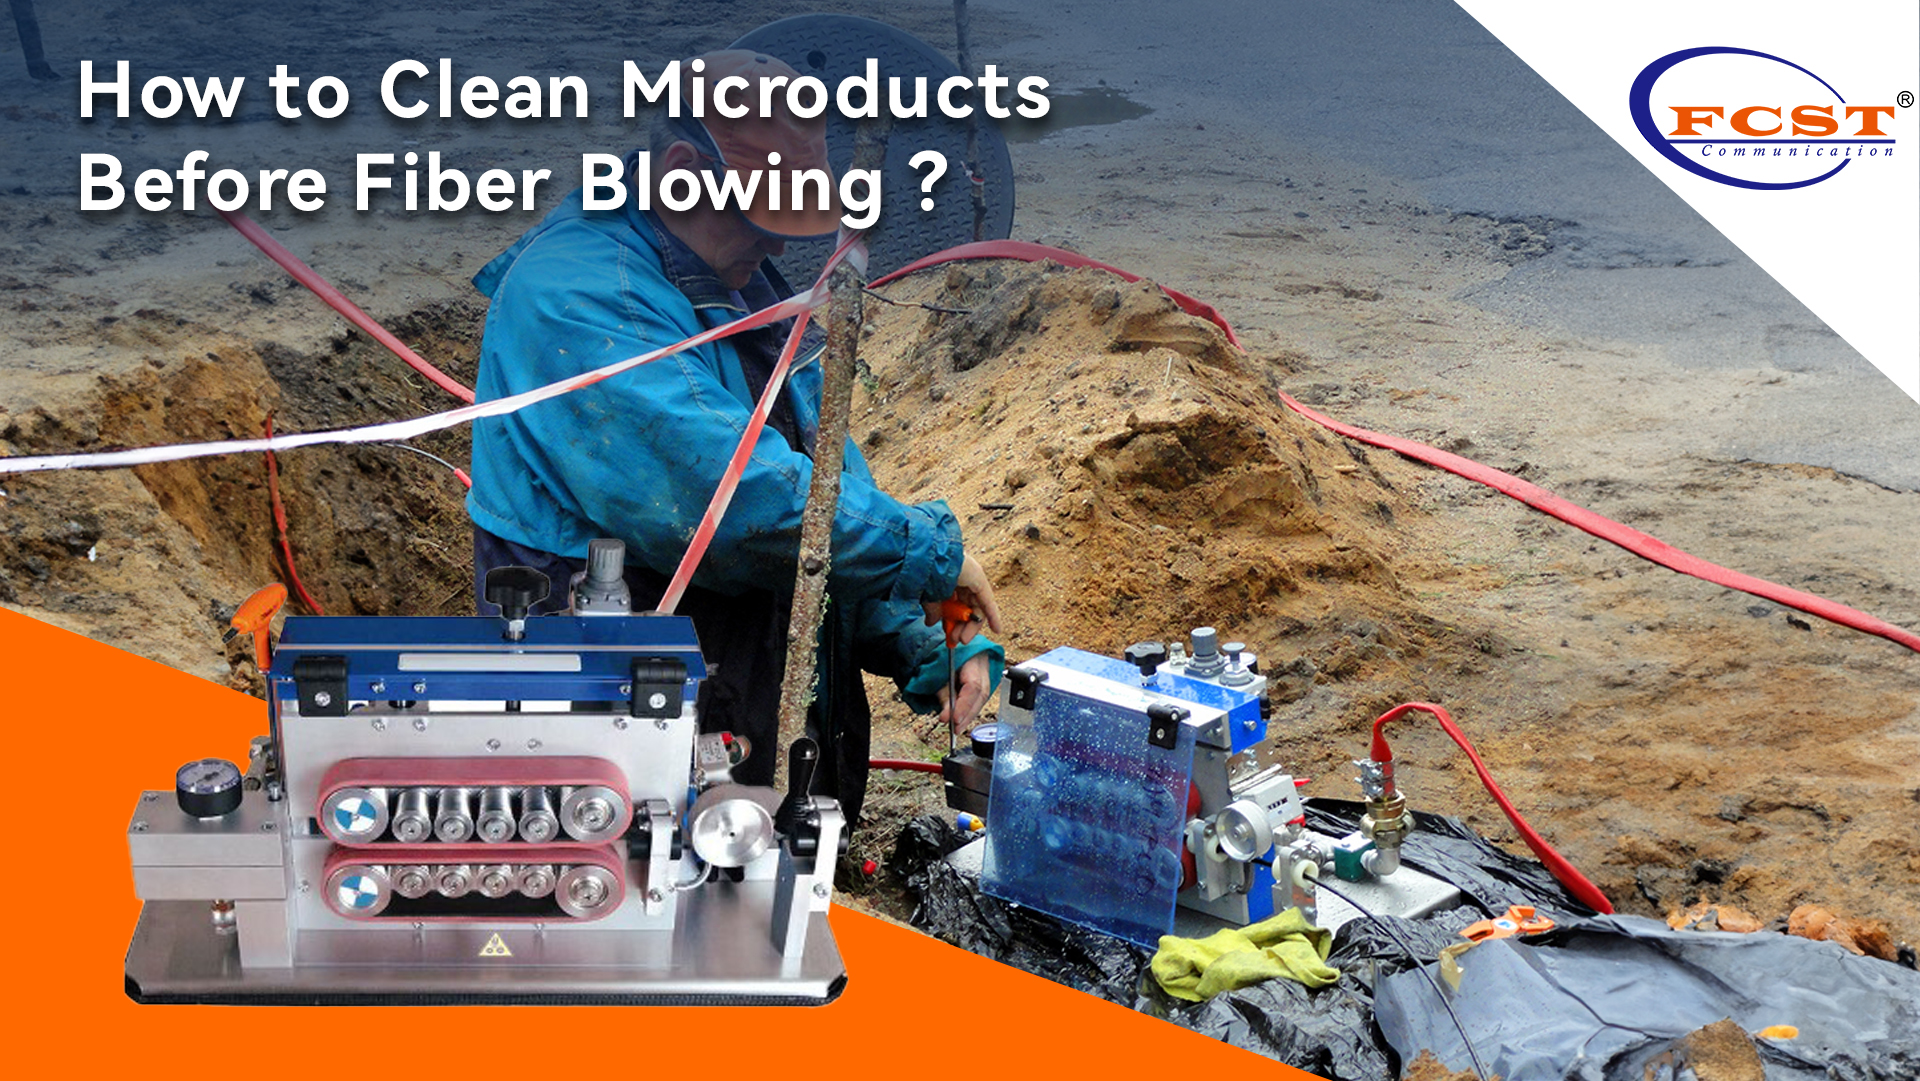 Como limpar os microdutos antes do sopro de fibras?